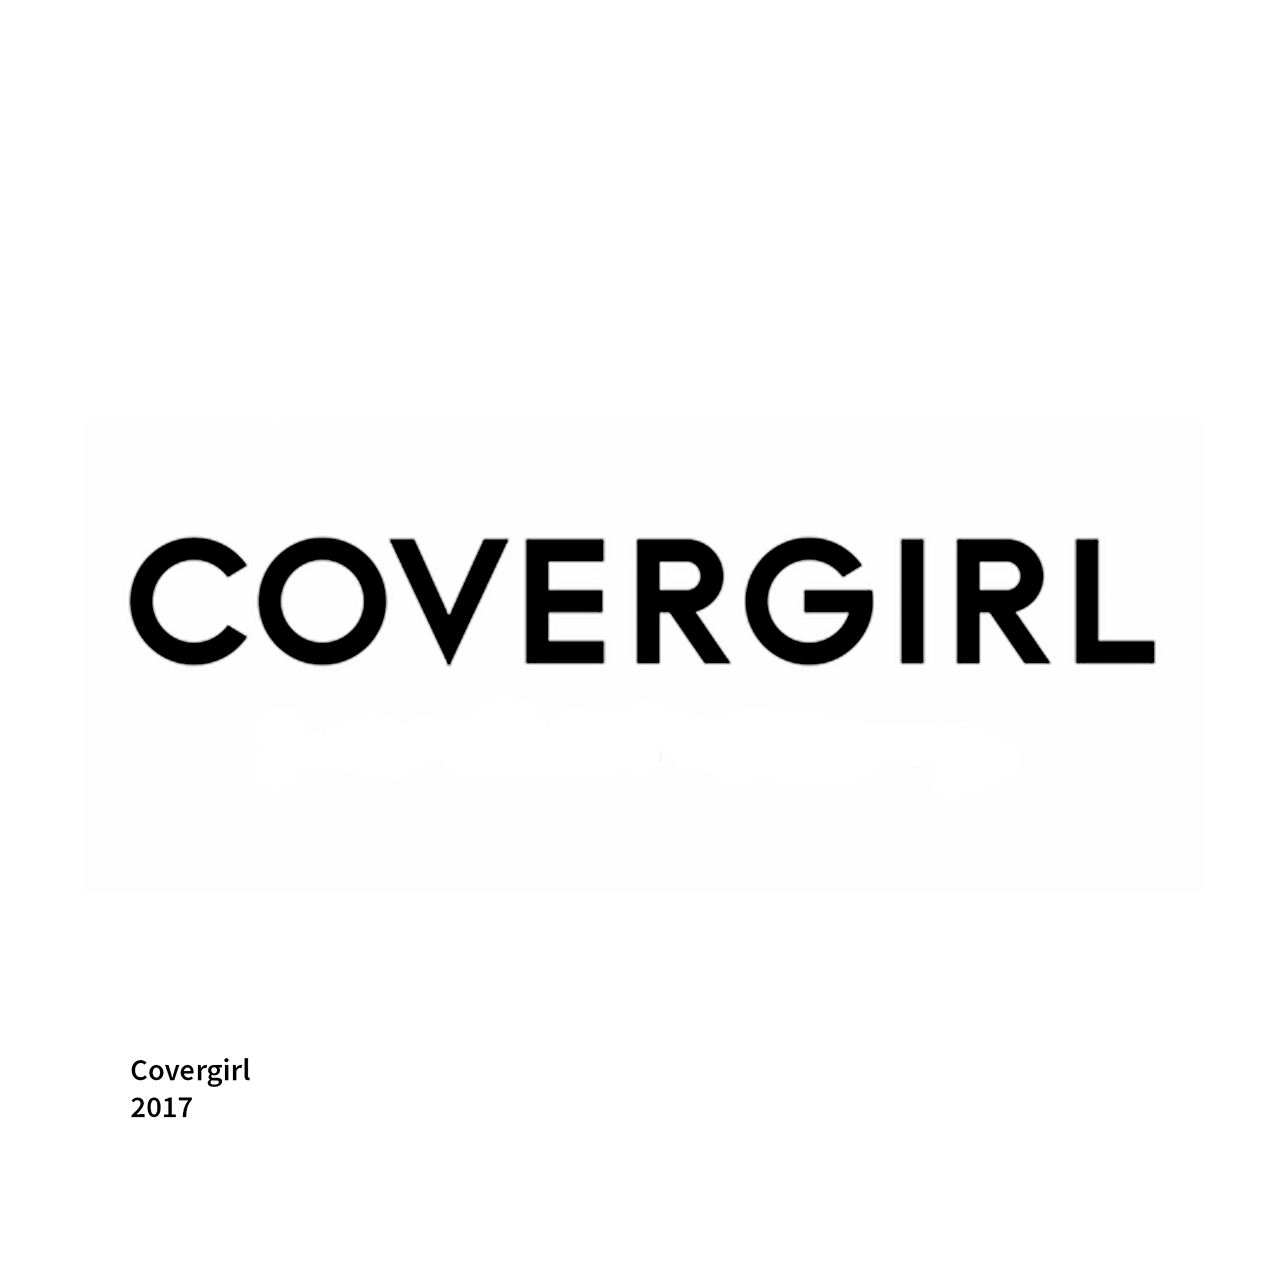 Covergilr Logo - Logo Hunting